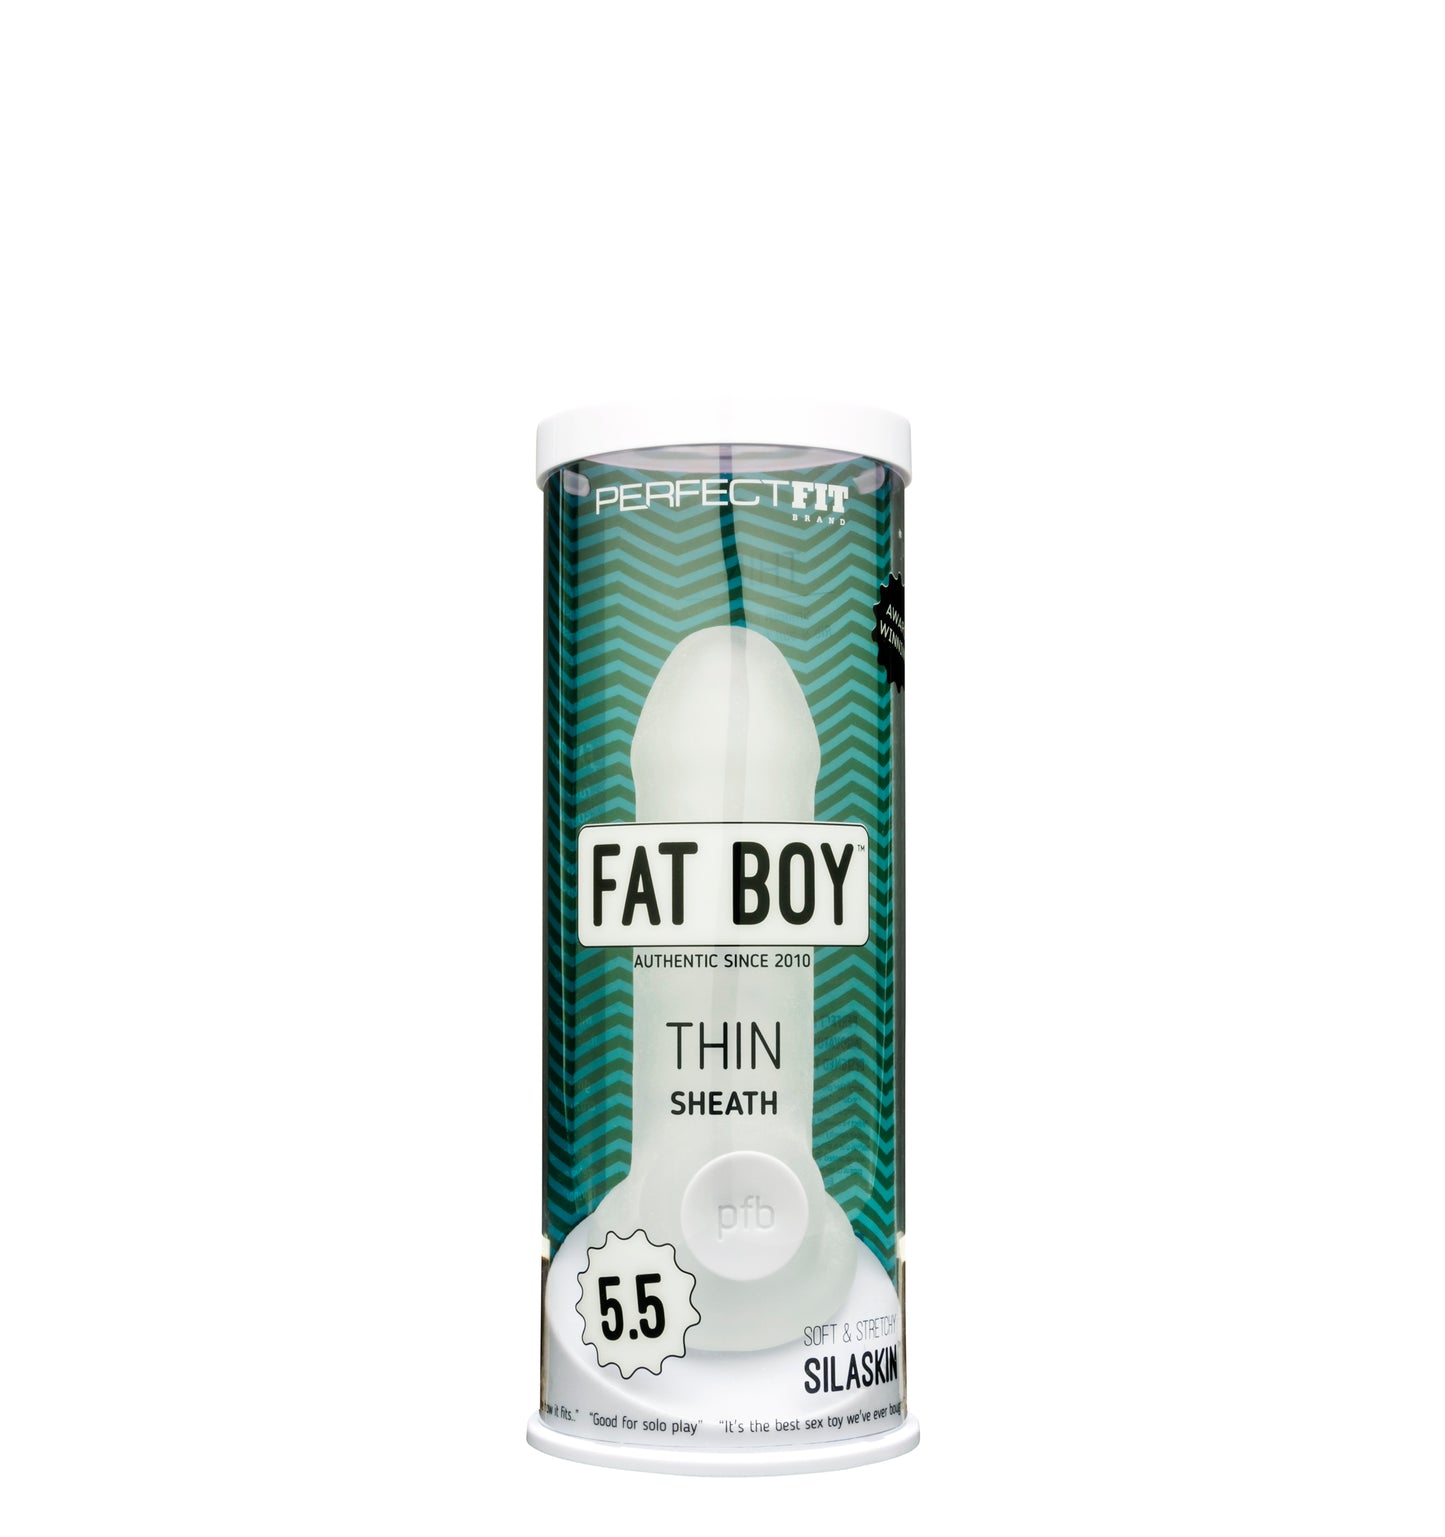 Fat Boy Thin Sheath 5.5 - Just for you desires